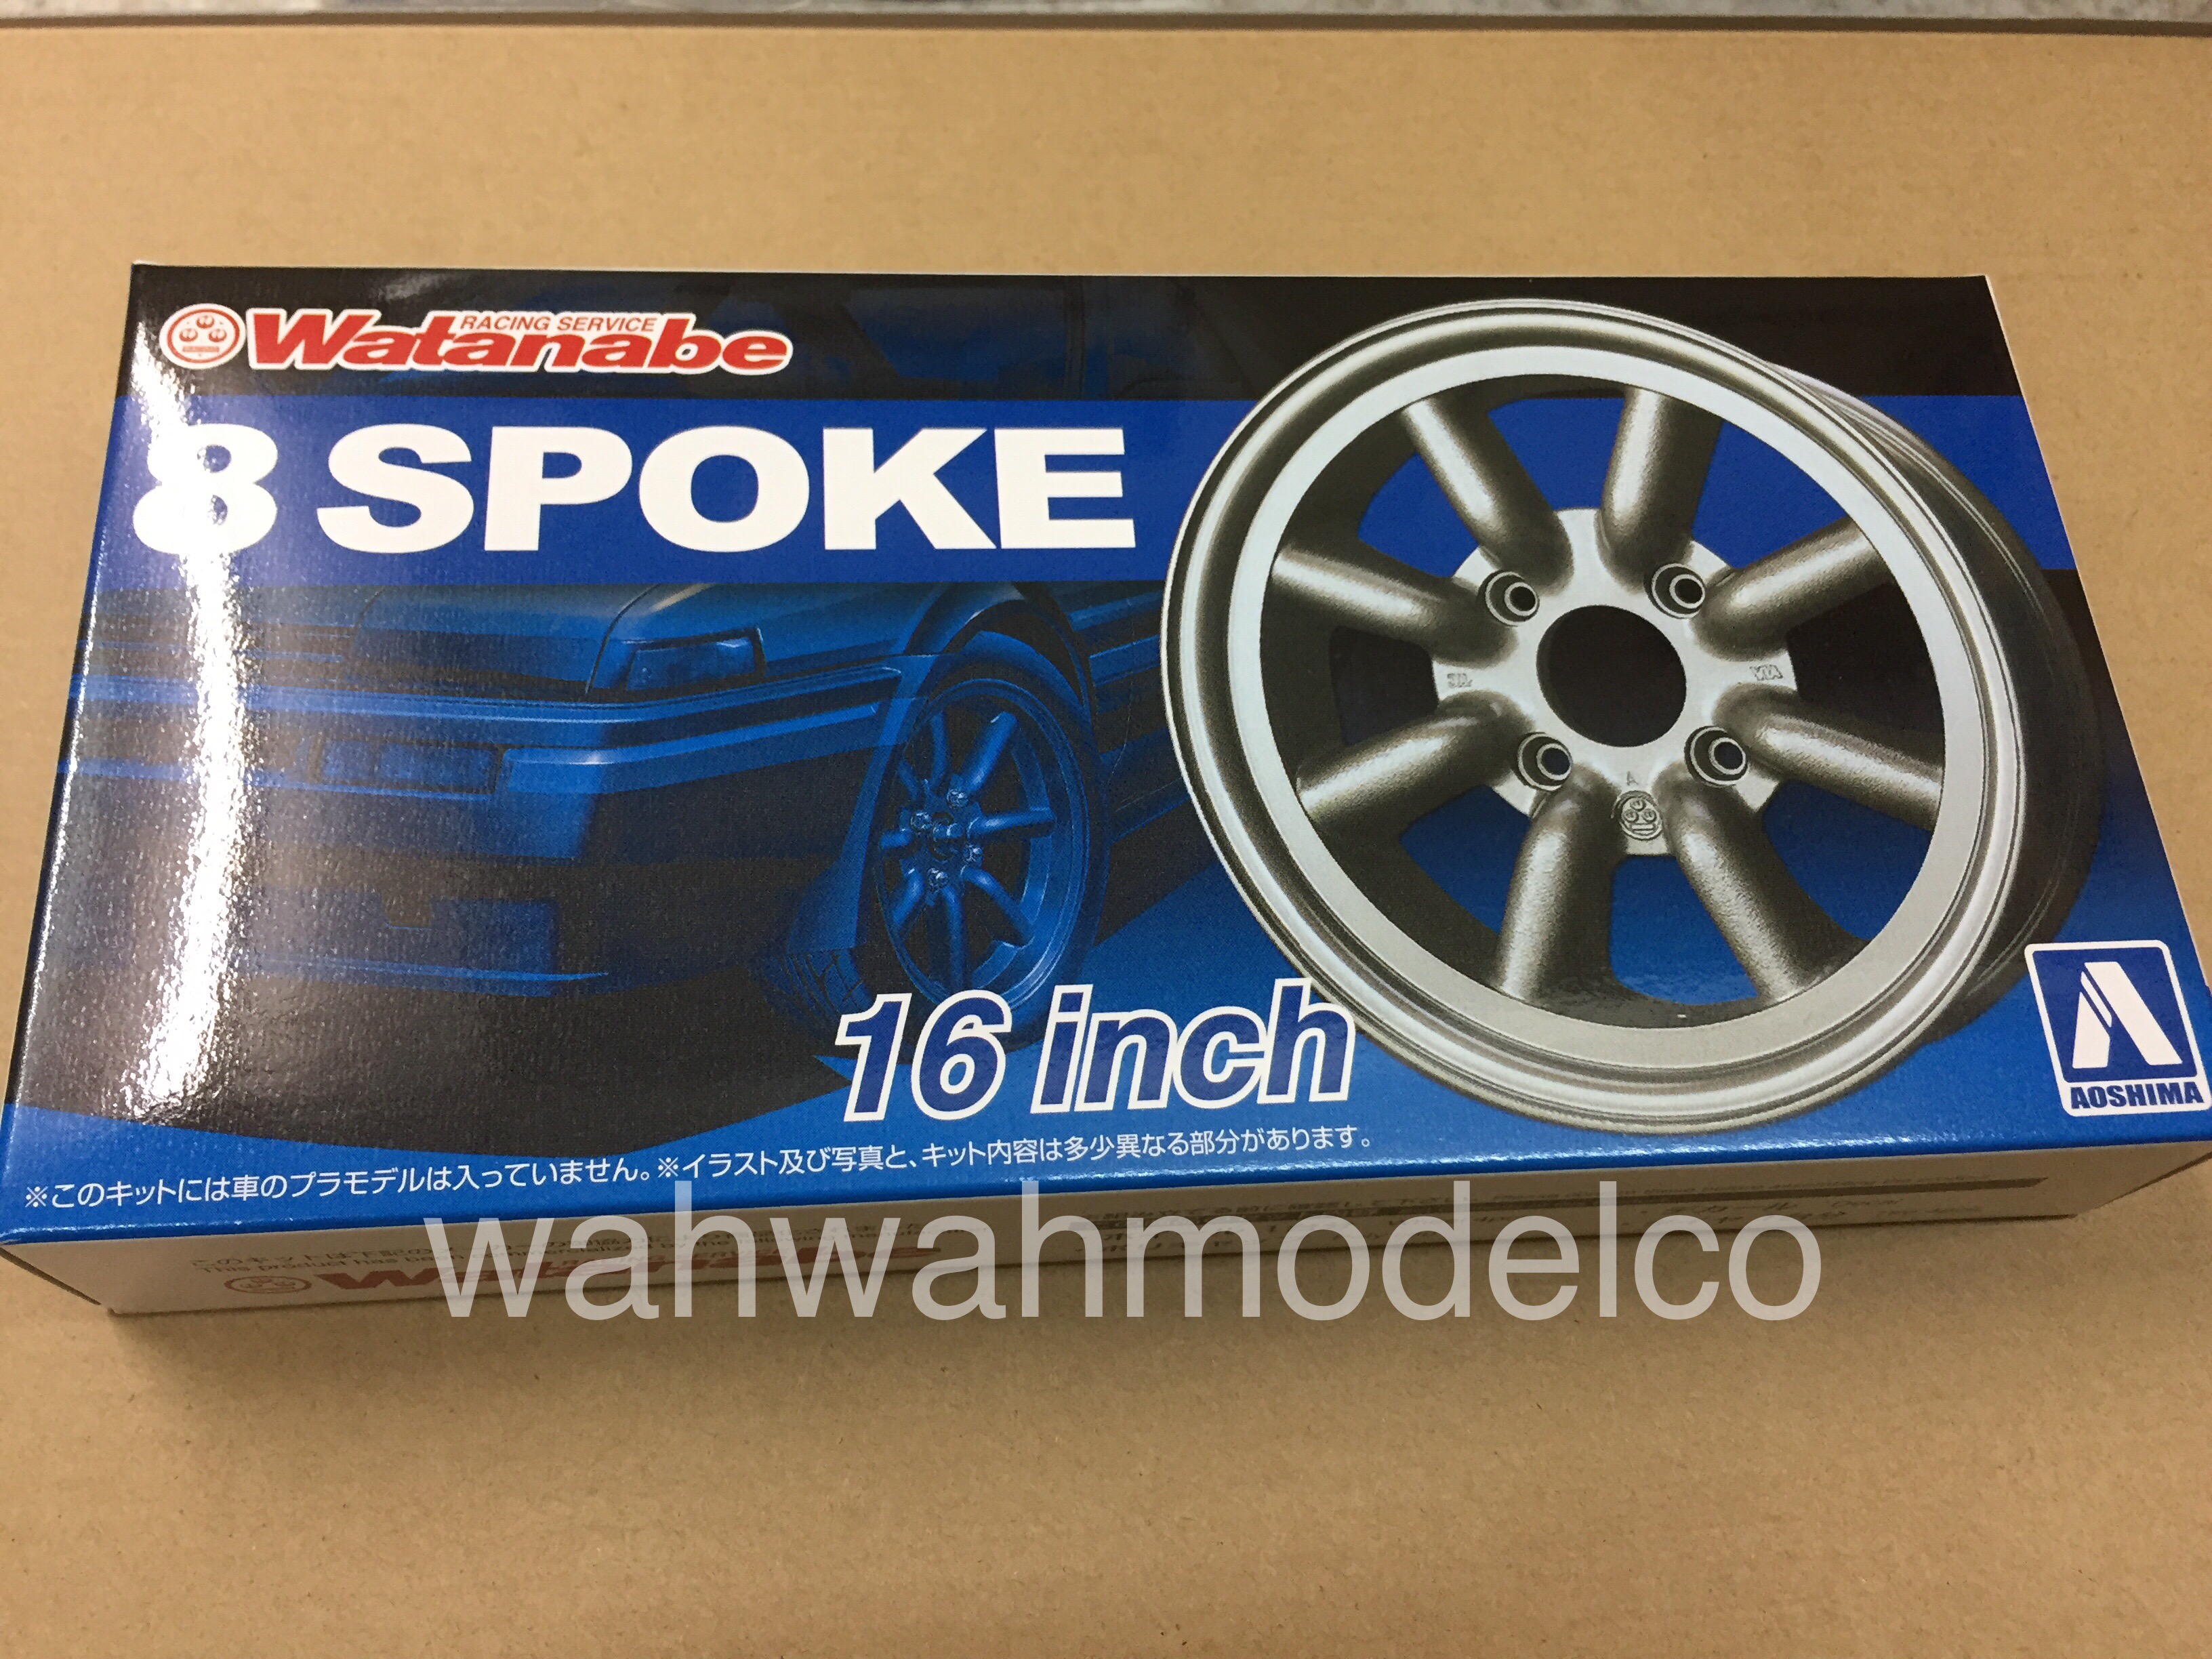 Aoshima Tuned Parts 1/24 RS Watanabe 8spoke 16inch Tire & Wheel Set